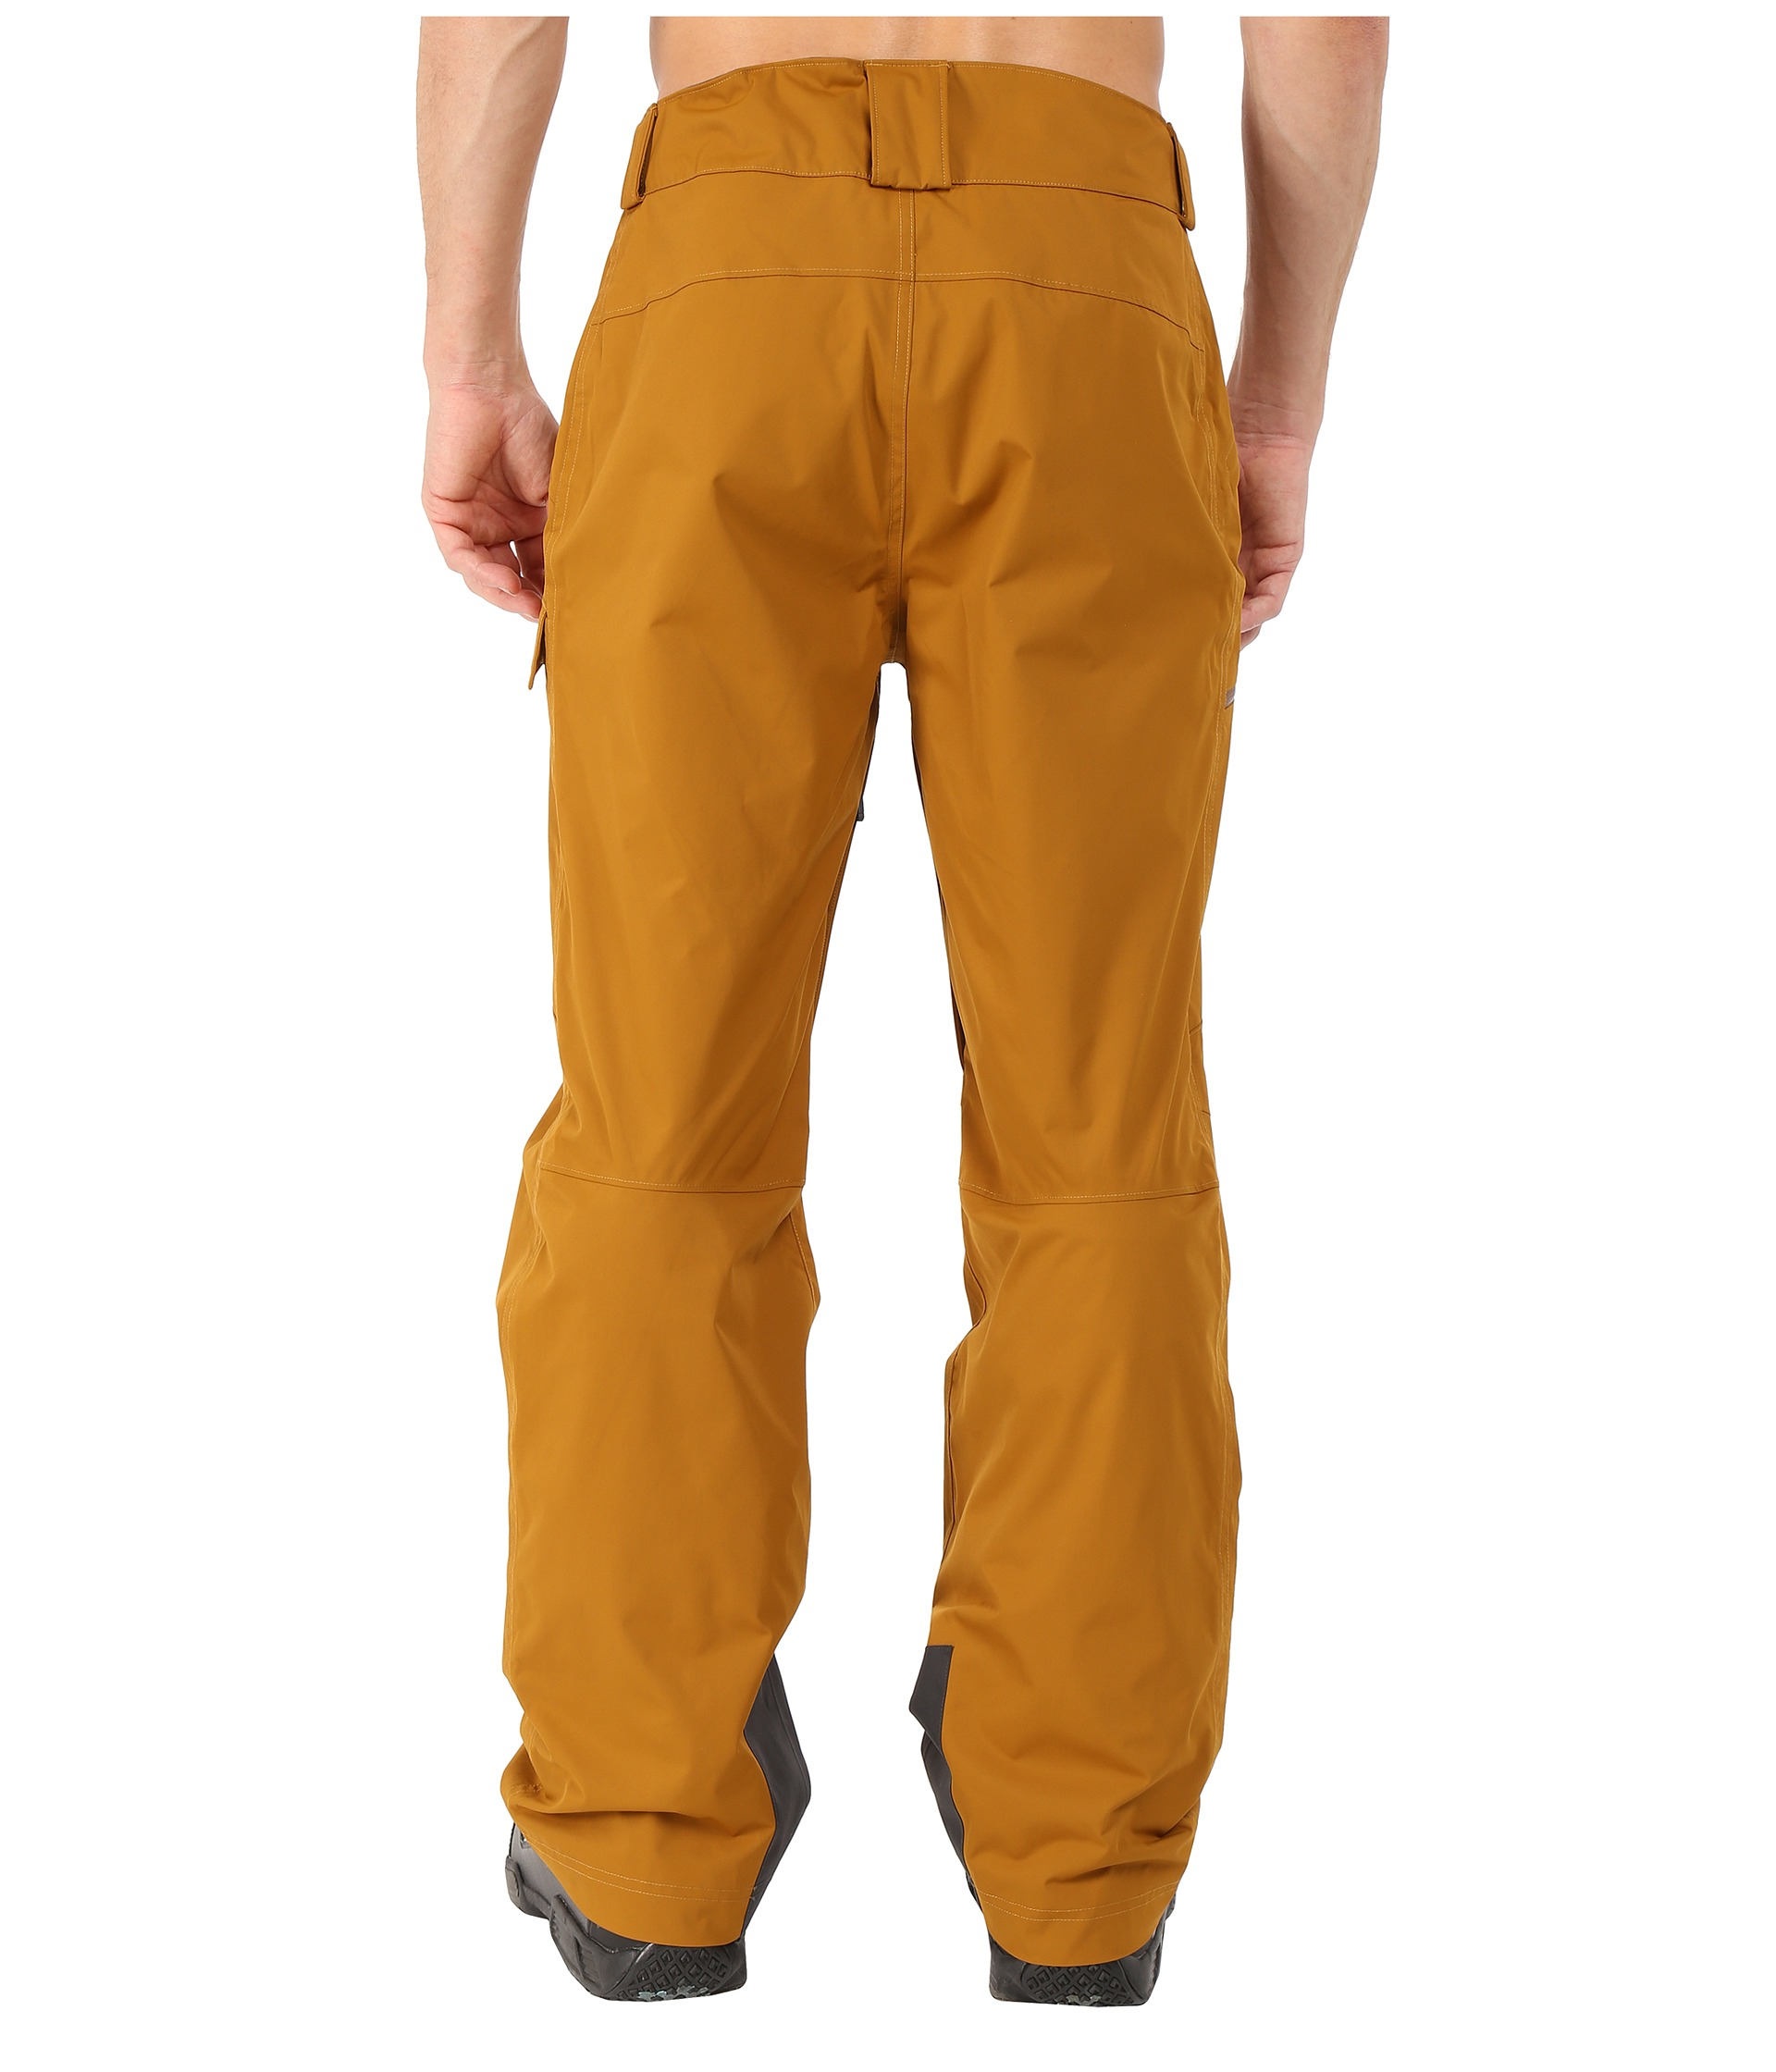 Mountain Hardwear Returnia™ Cargo Pants in Brown for Men - Lyst